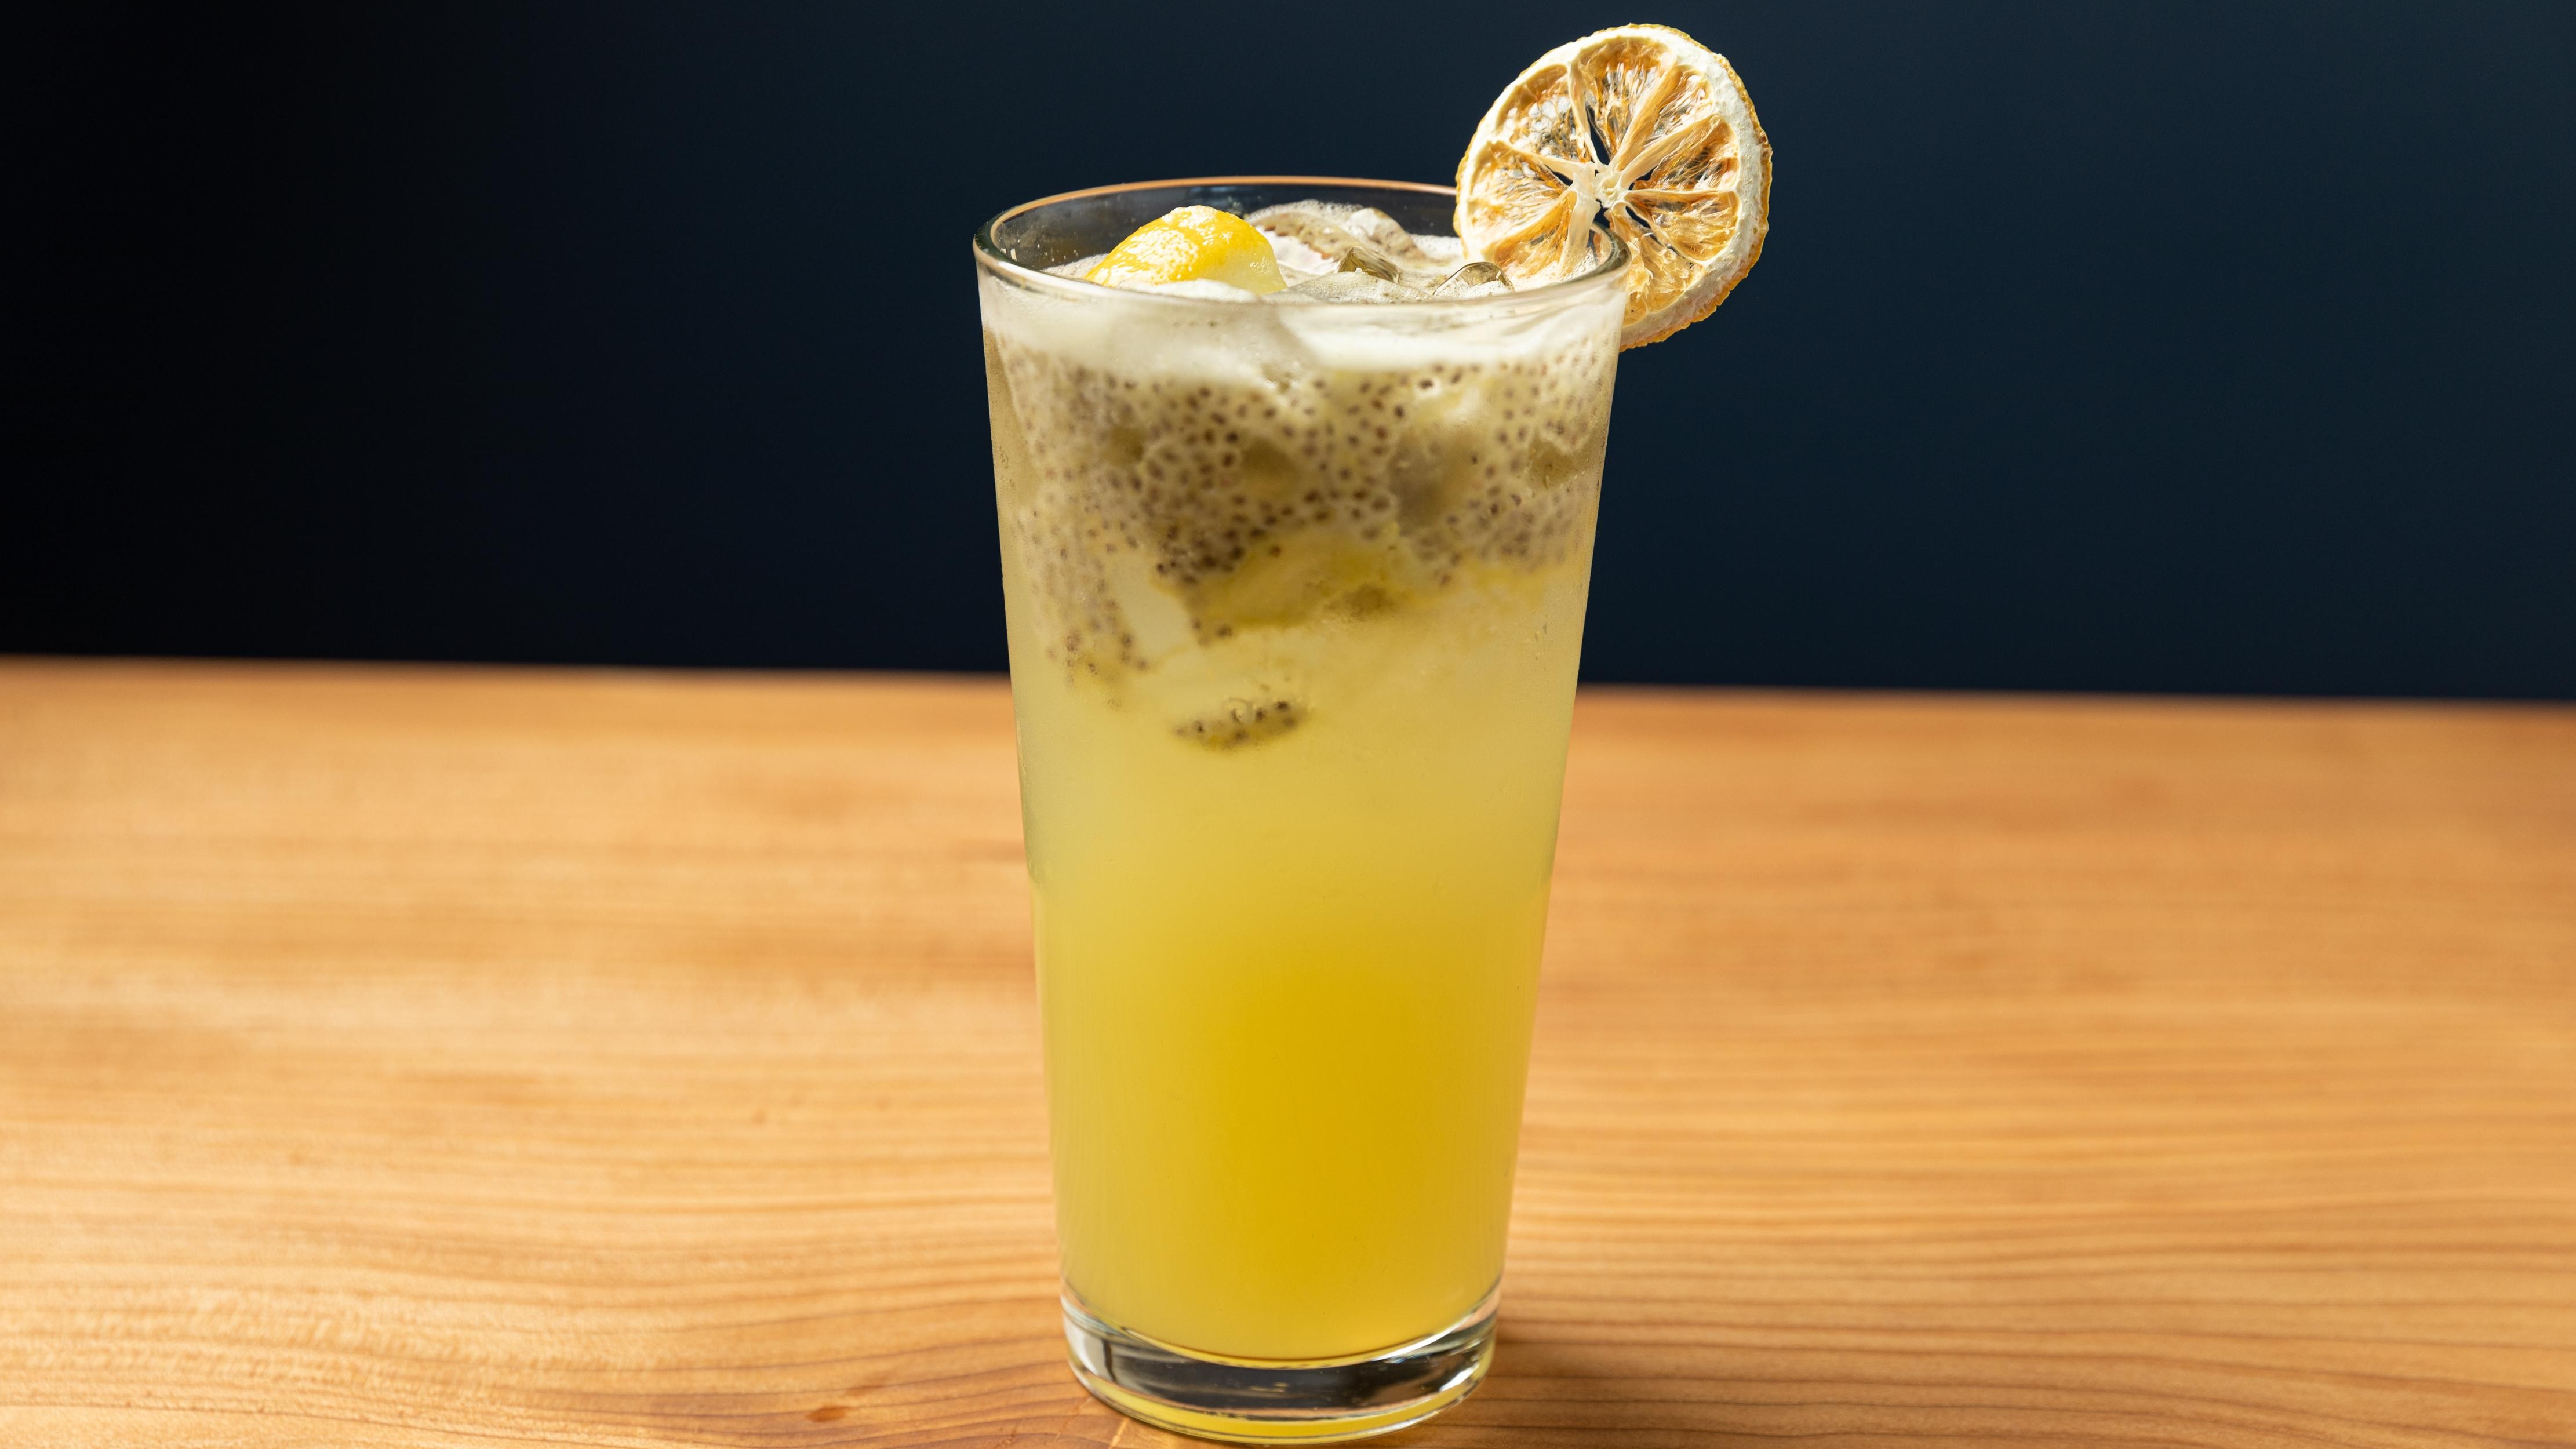 Fuji Apple Lemonade with Chia Seeds